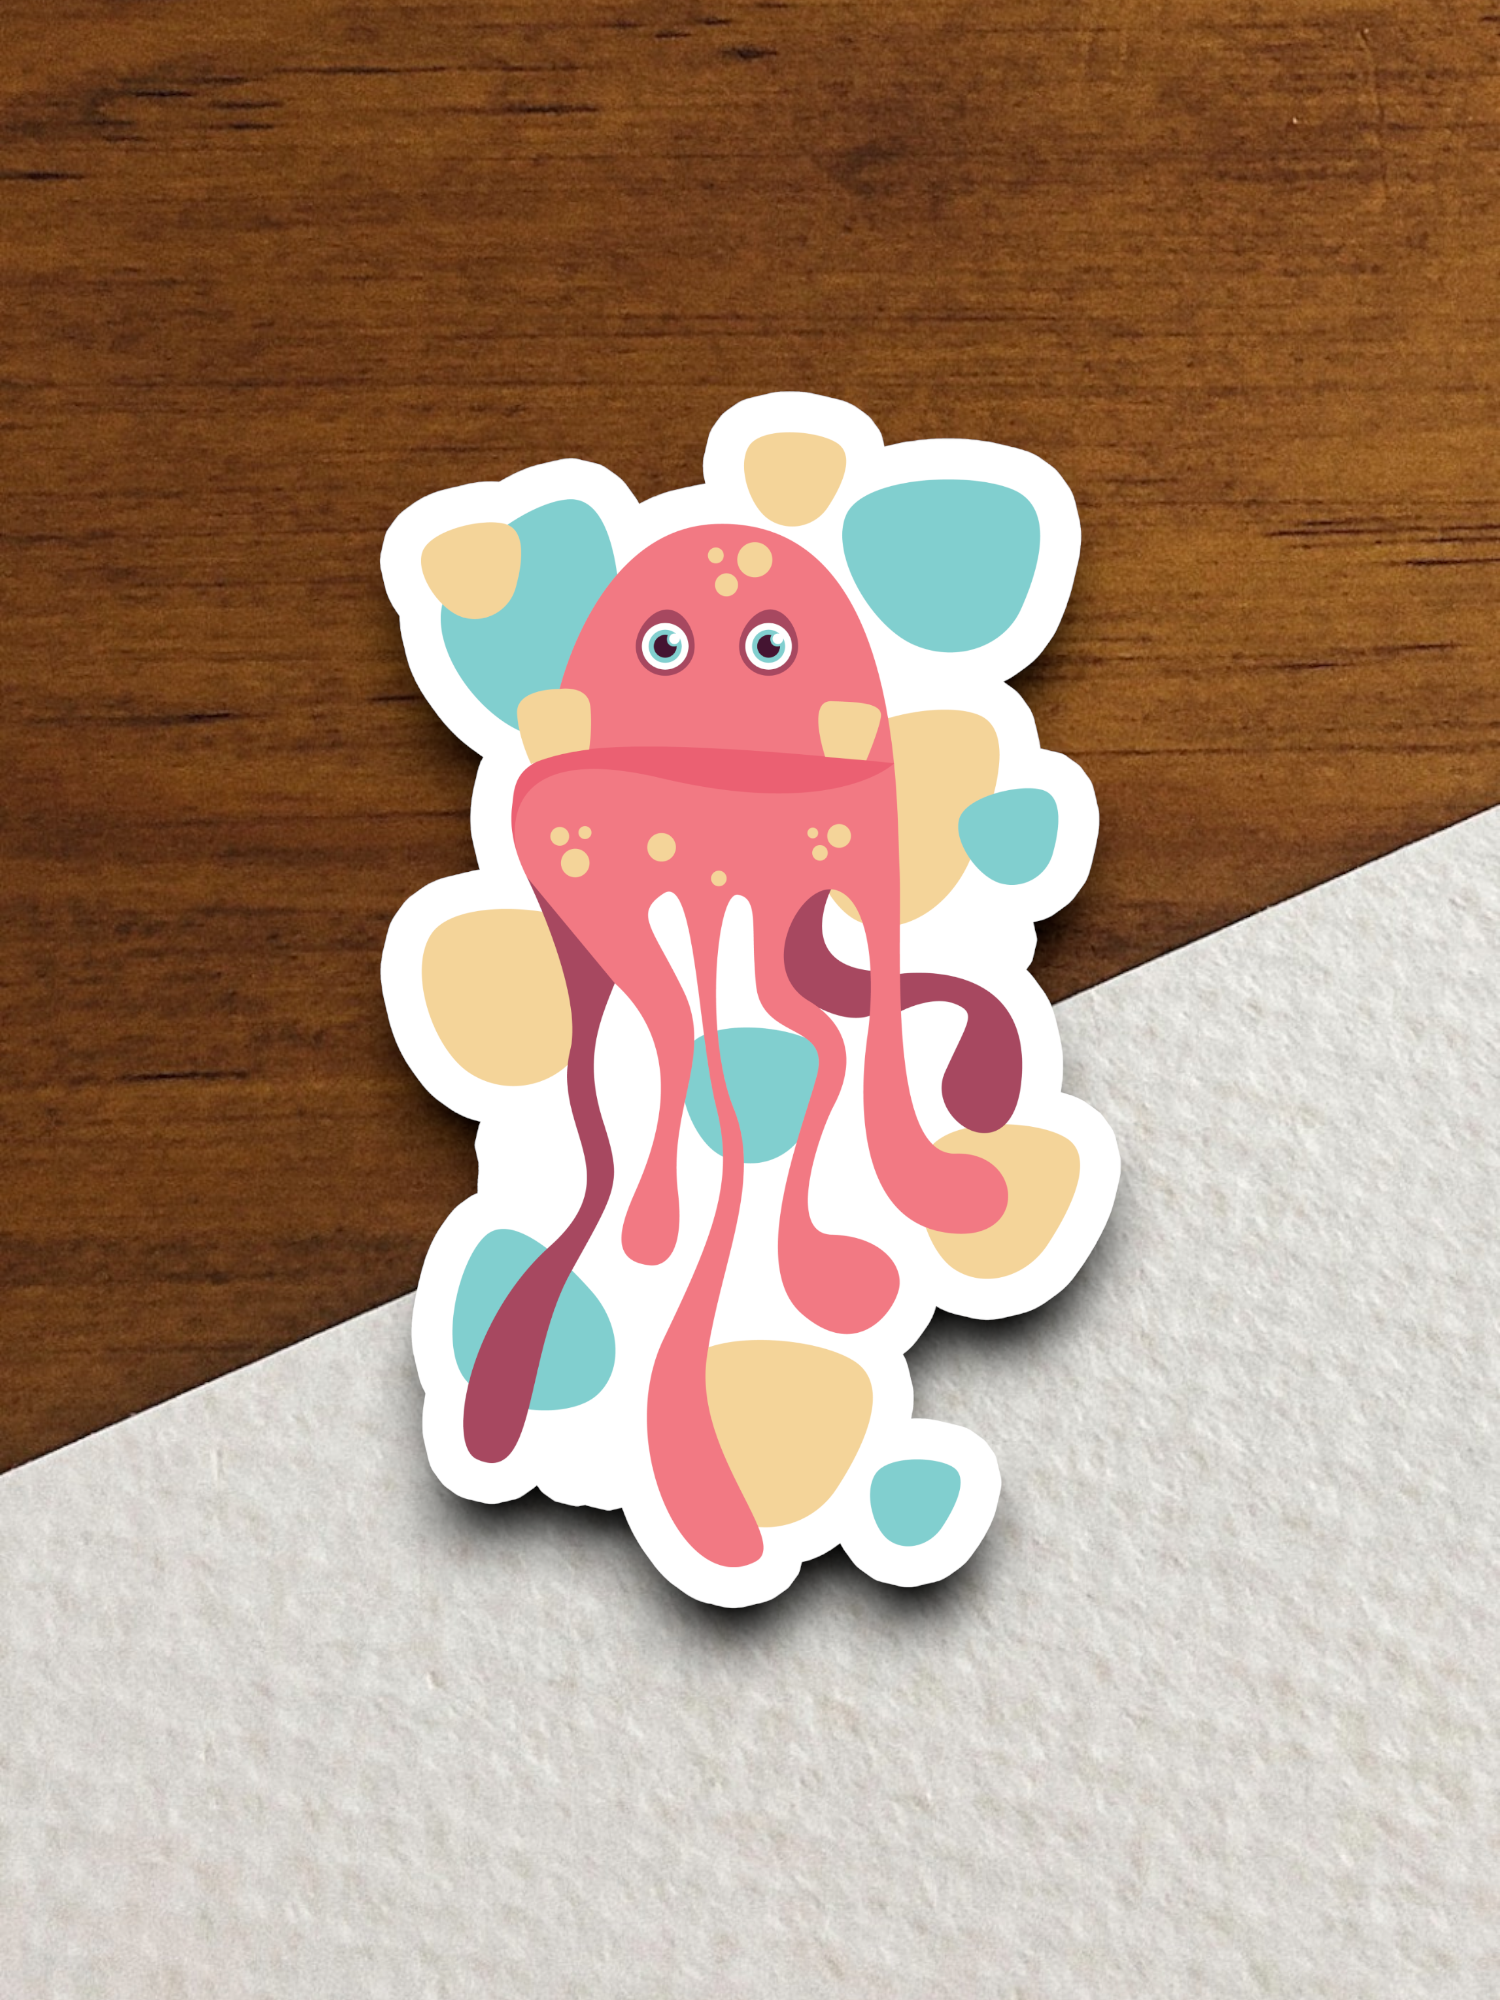 Artistic Squid Version 2 - Artistic Sticker